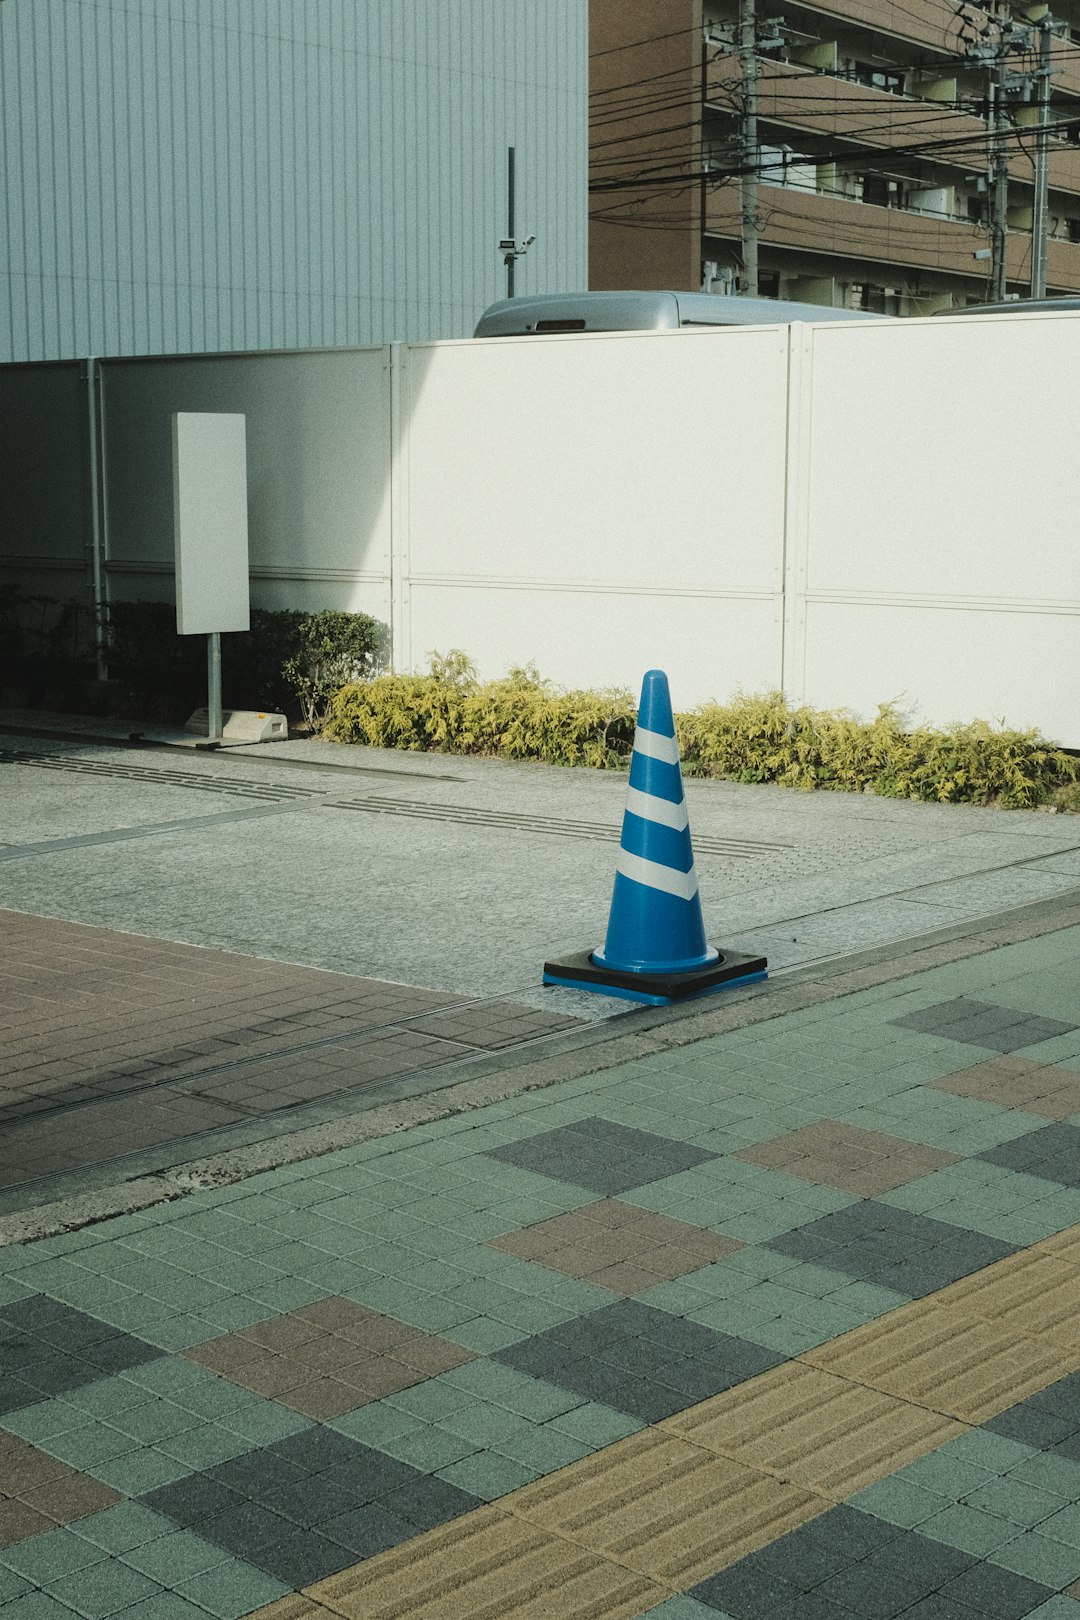 blue and white striped traffic cone on gray concrete road